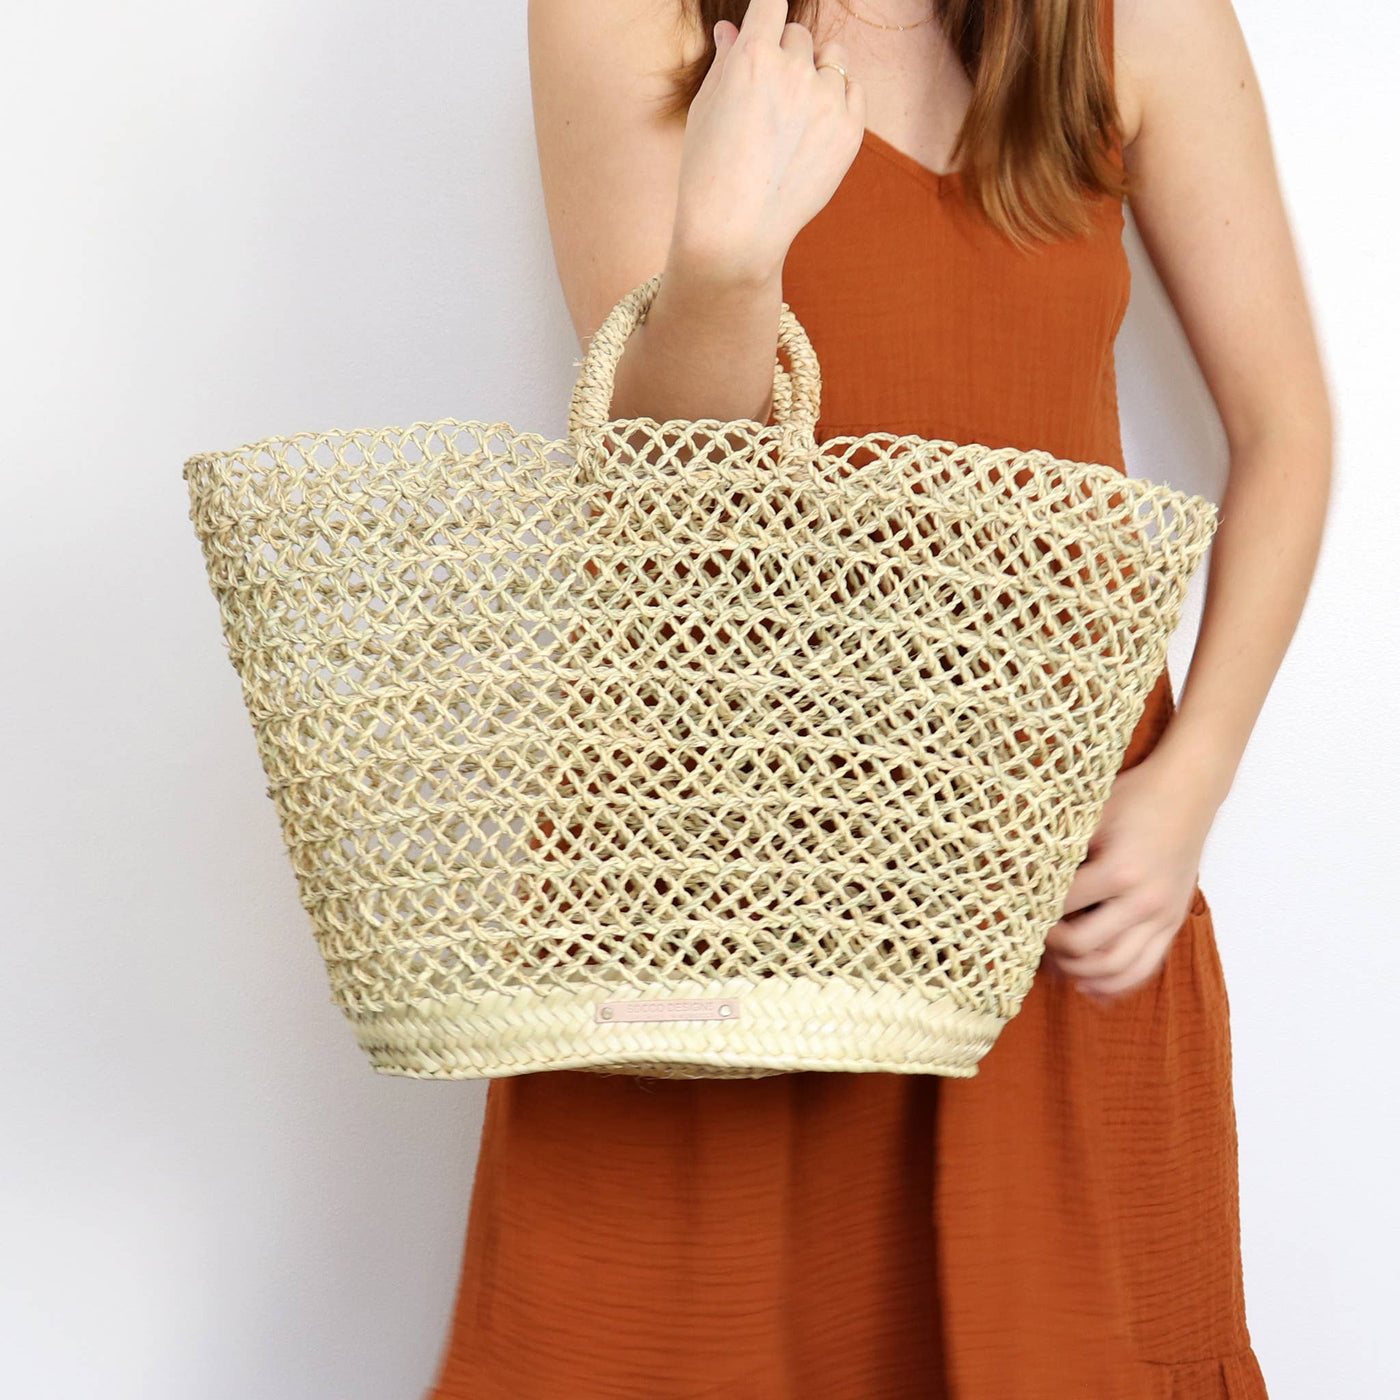 SOCCO Designs Albufeira French Basket - Straw Beach Tote - Simple Good